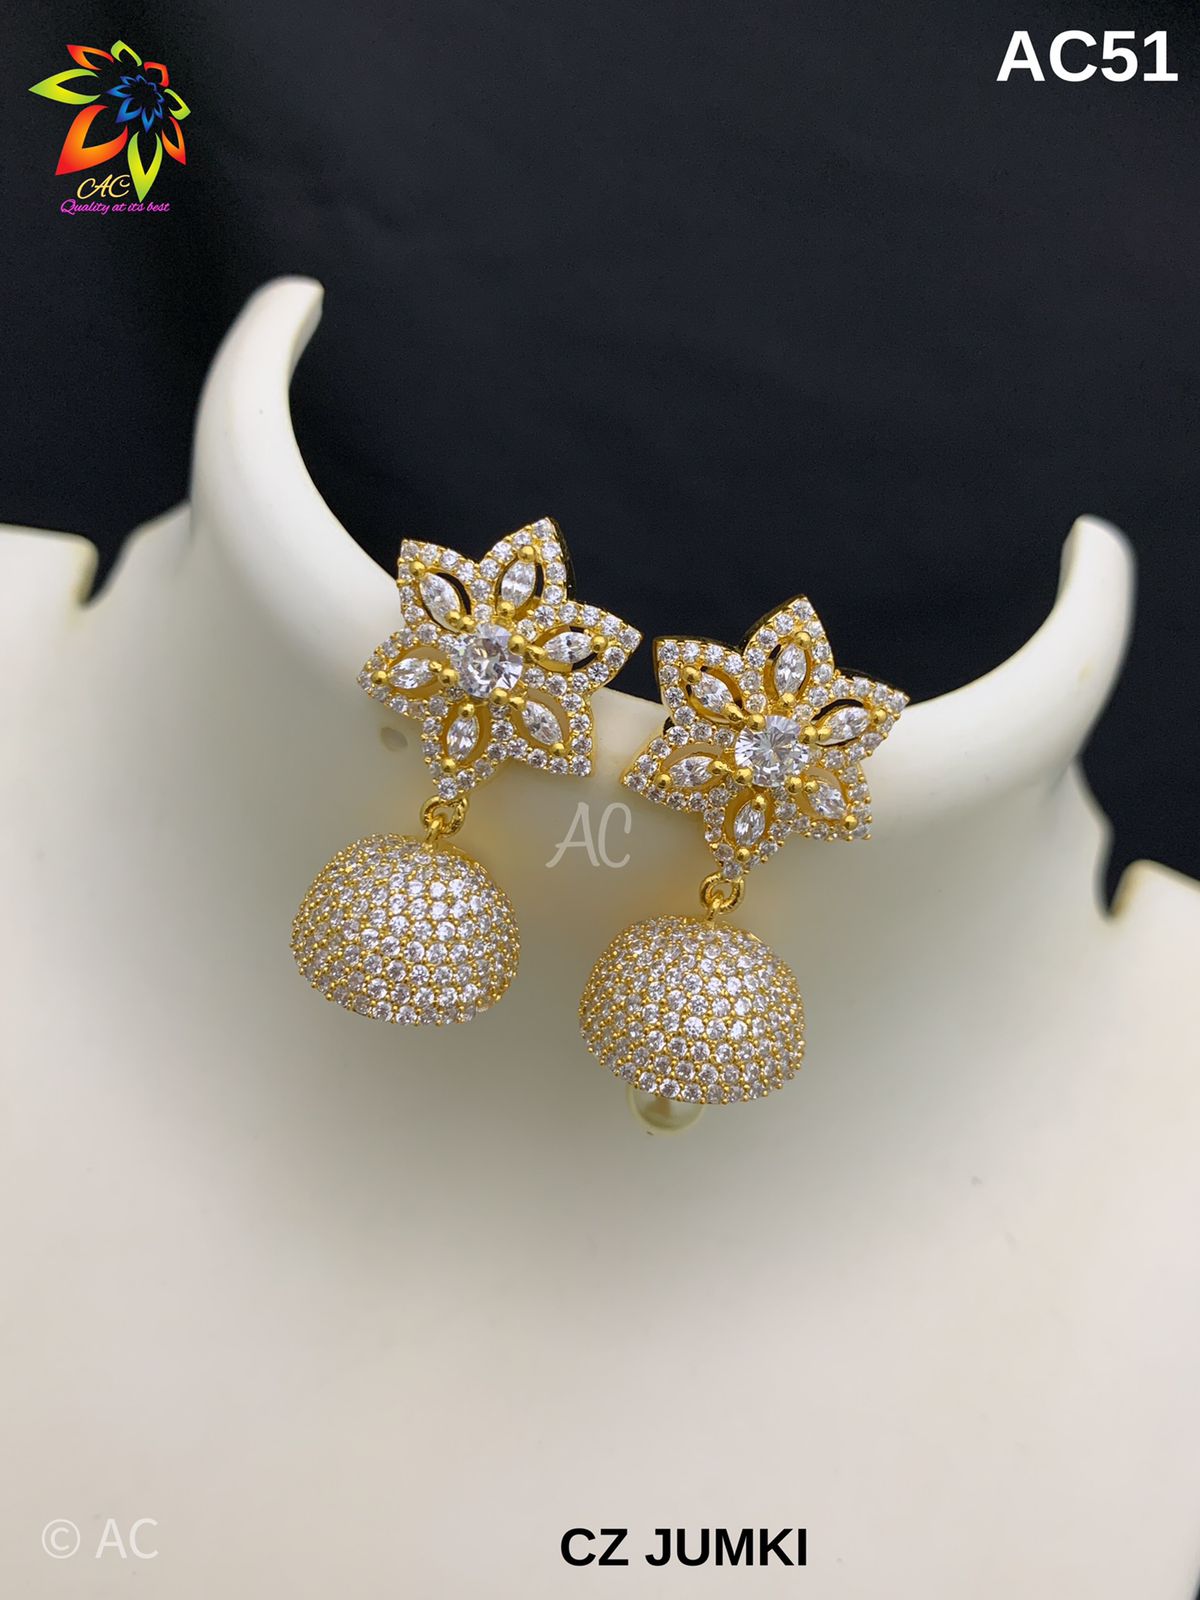 Simple floral white stone neckwear with earrings- Zivara Fashion